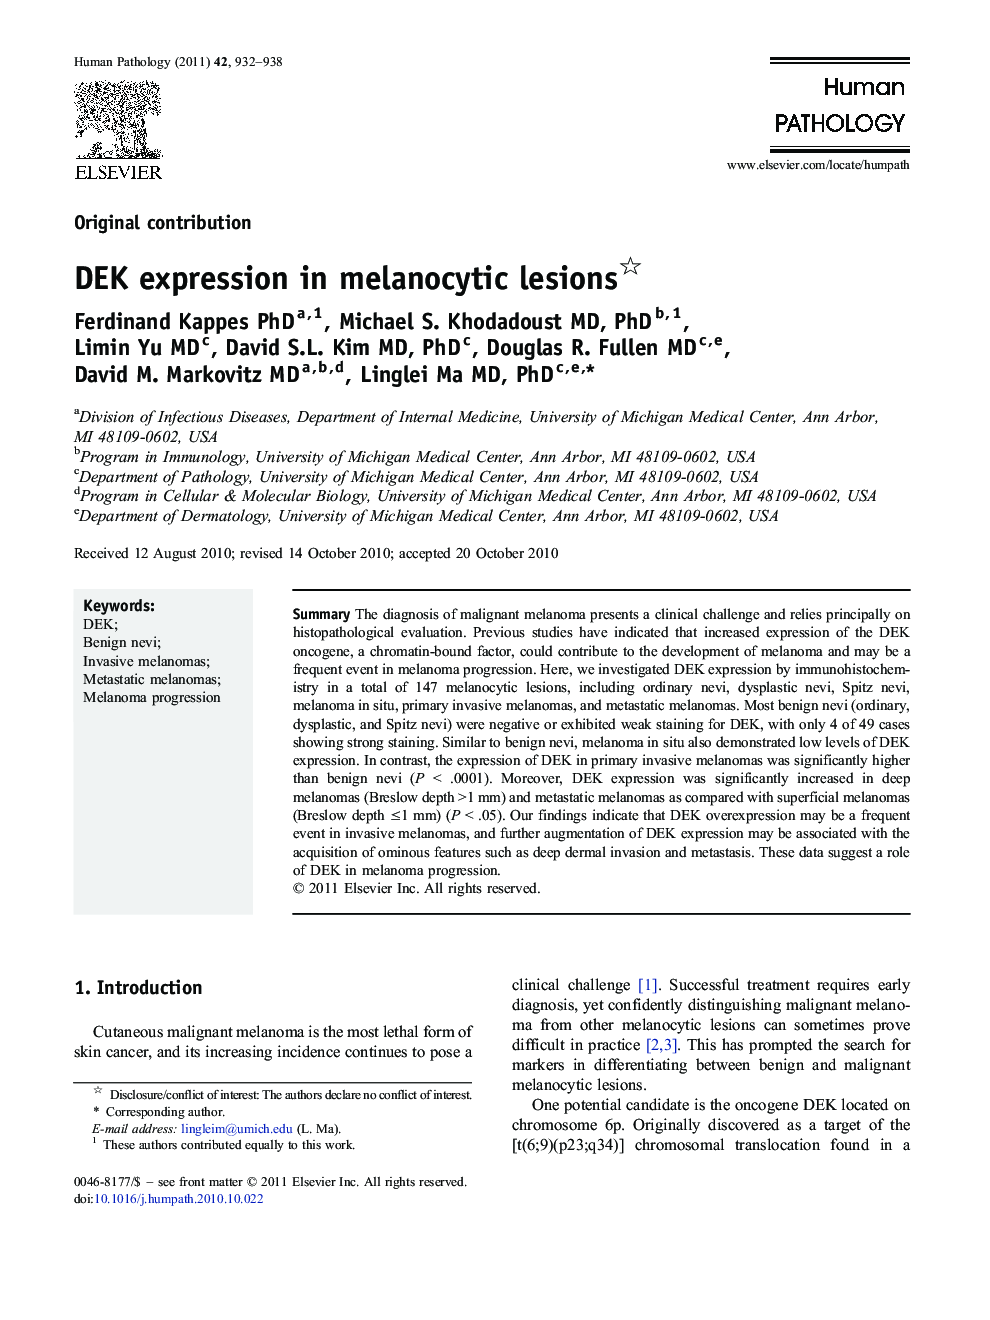 DEK expression in melanocytic lesions 